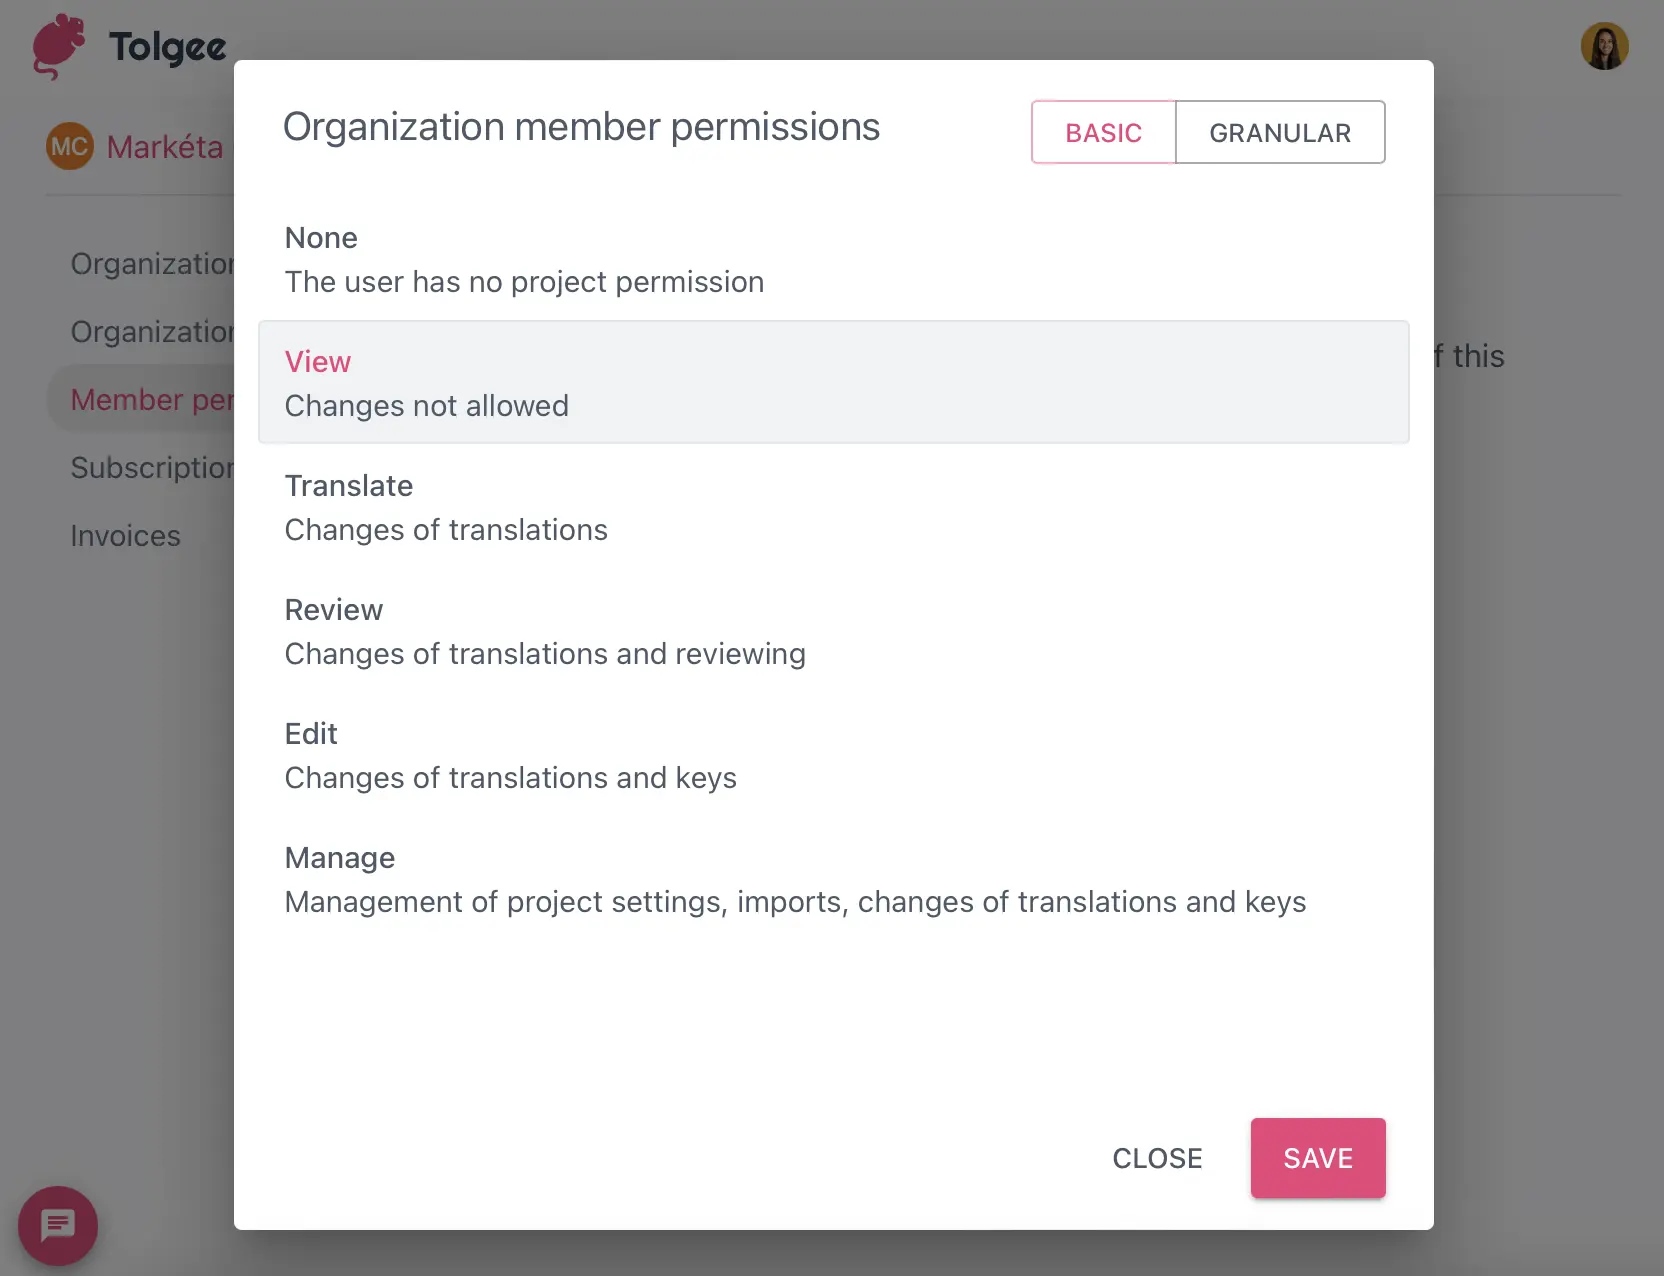 Organization member permissions